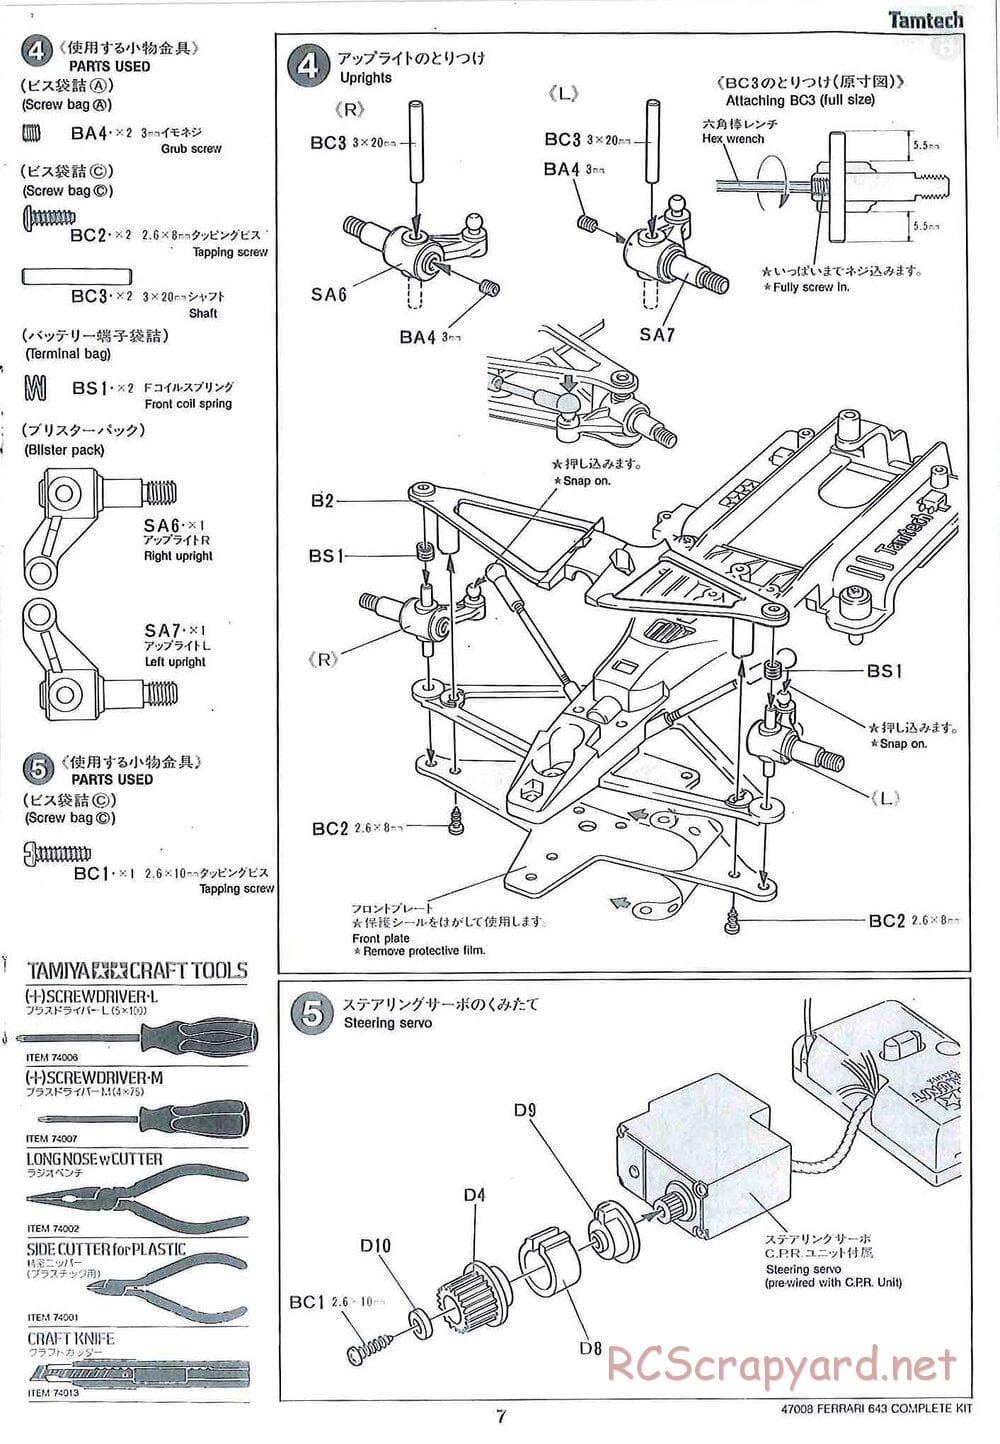 Tamiya - Tamtech - Ferrari 643 Chassis - Manual - Page 7